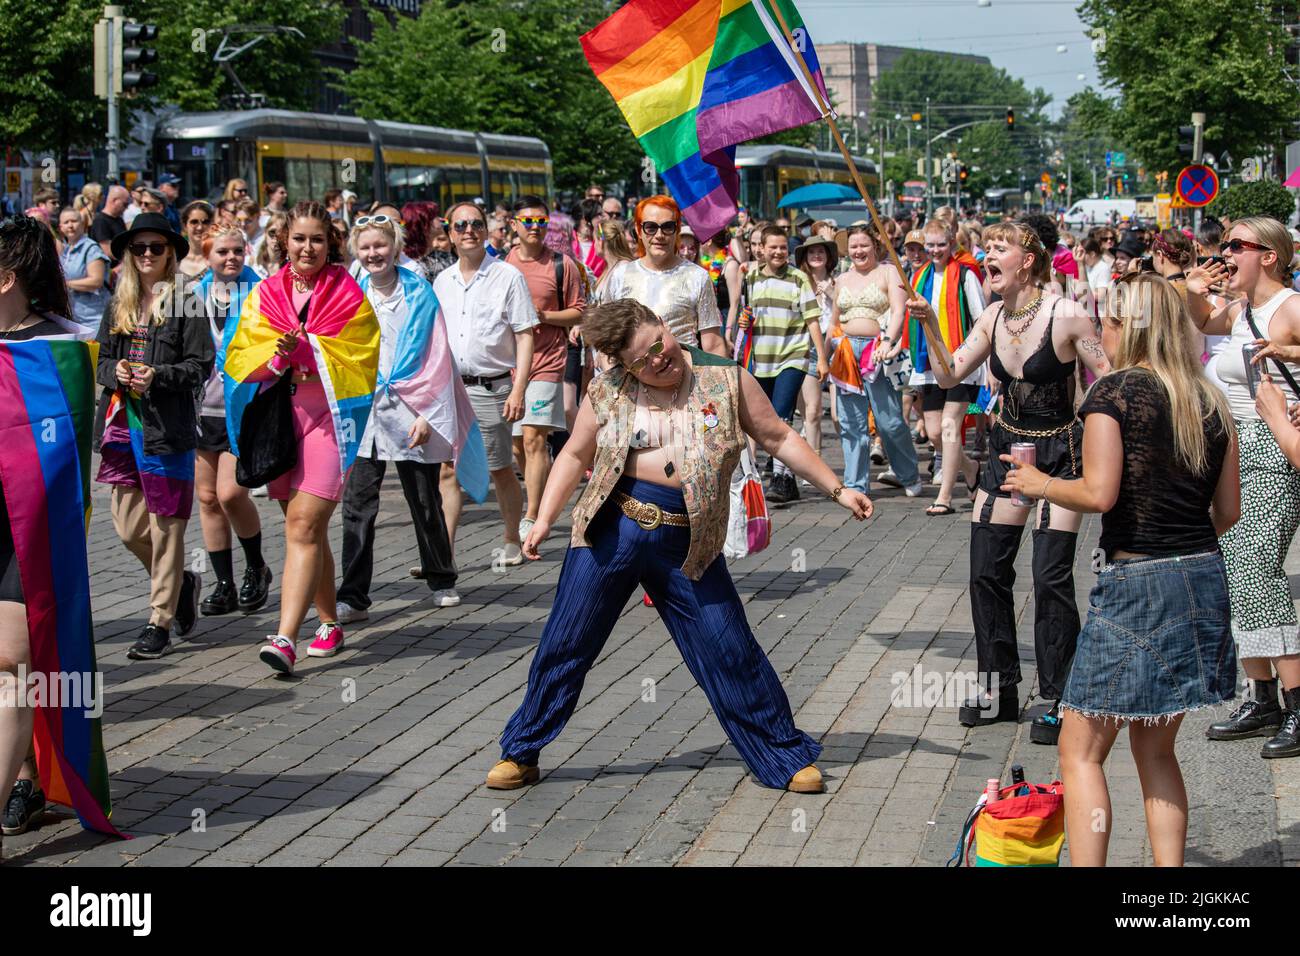 Dancing in the street at Helsinki Pride 2022 Parade in Mannerheimintie, Helsinki, Finland. Stock Photo